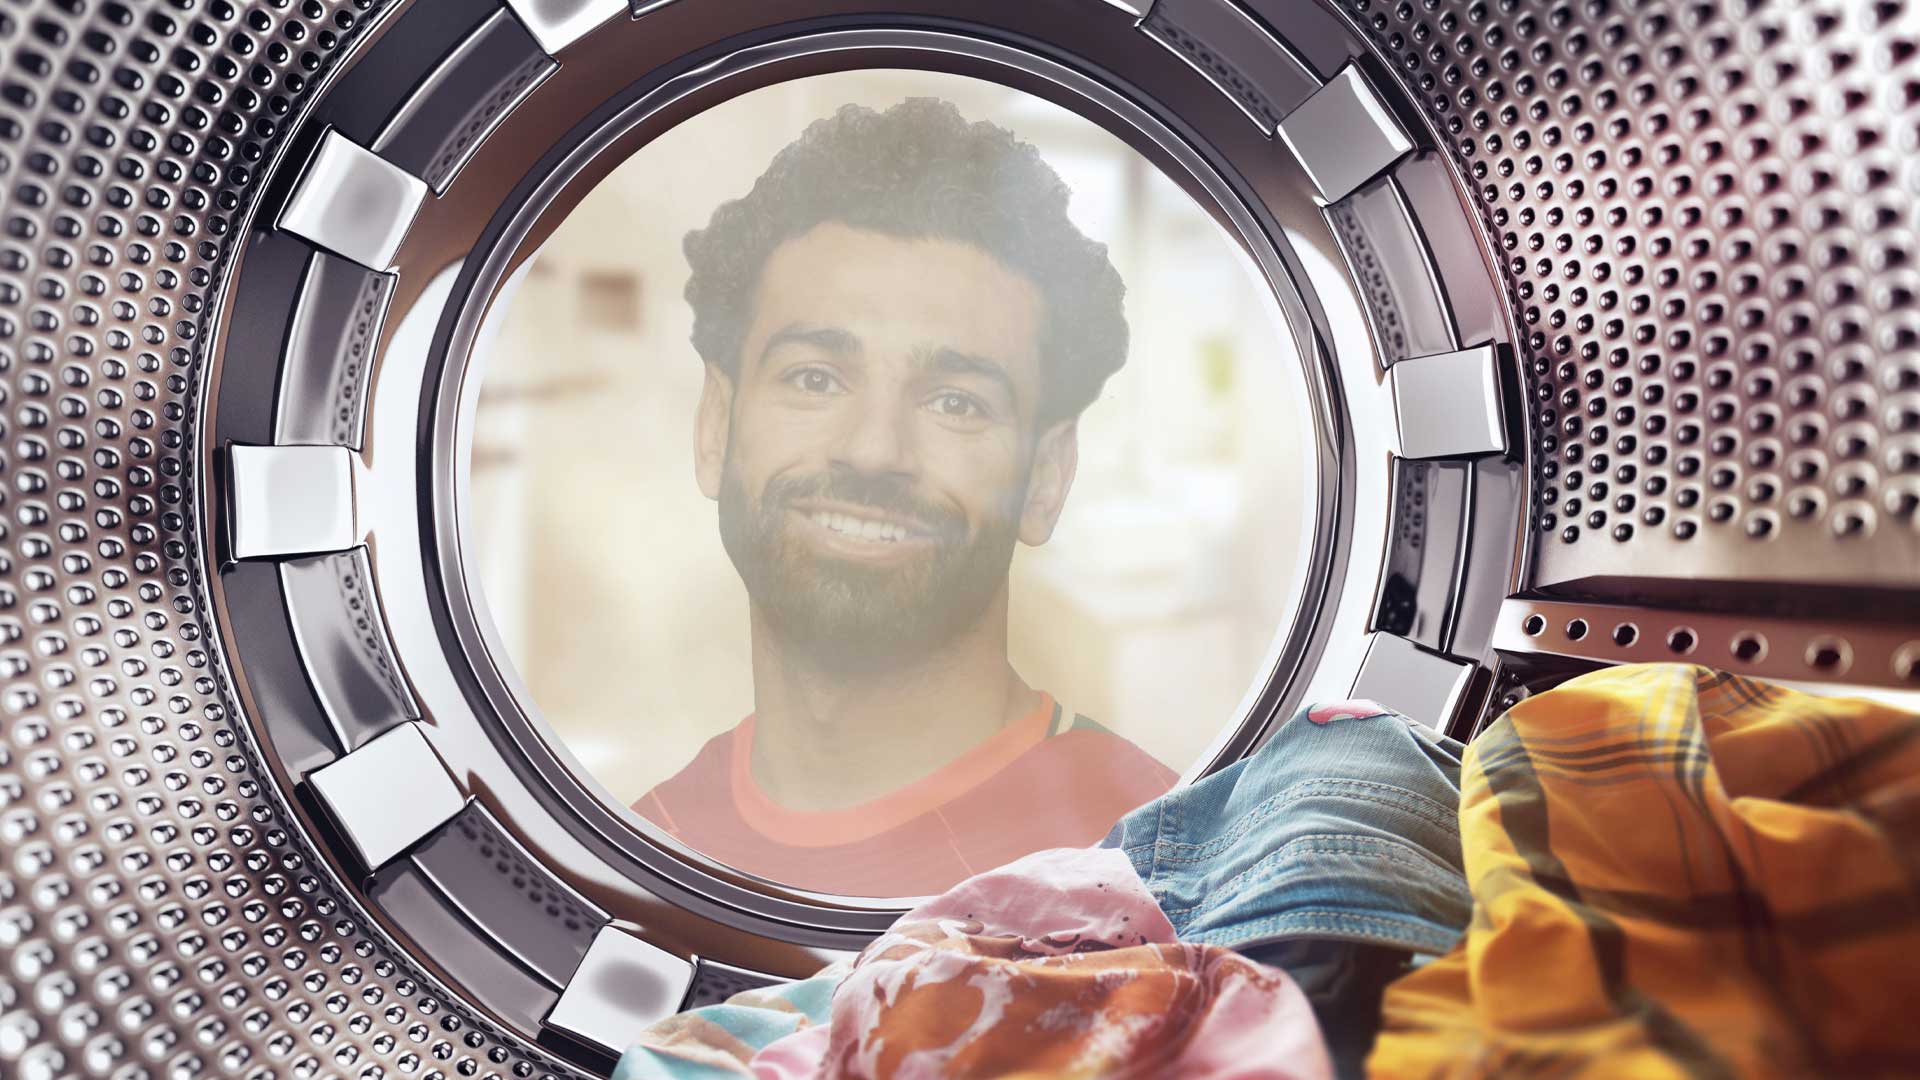 Mo Salah staring into a washing machine